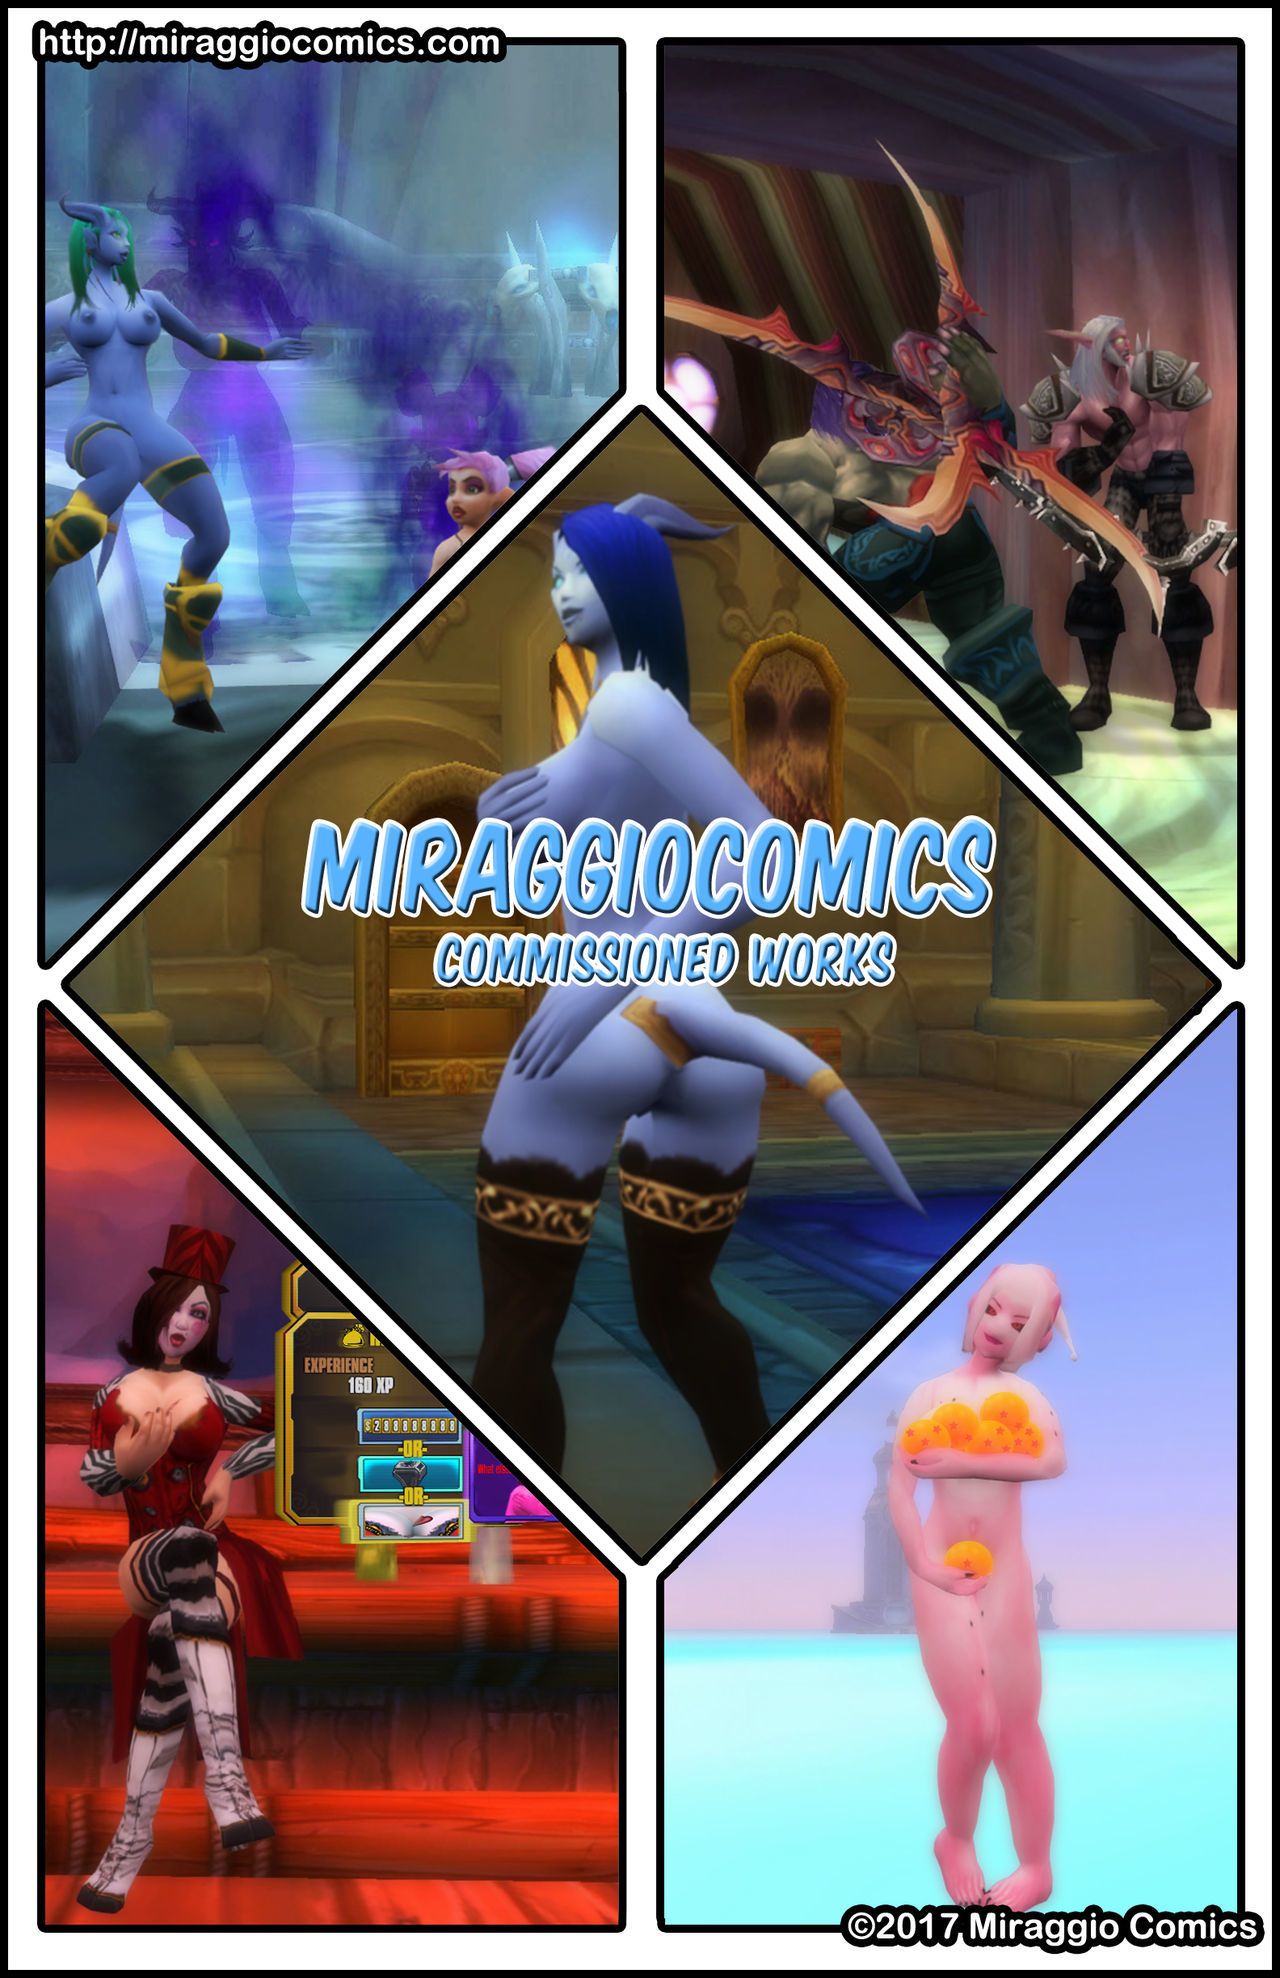 miraggiocomics - 欧州委員会 D 美術 操作